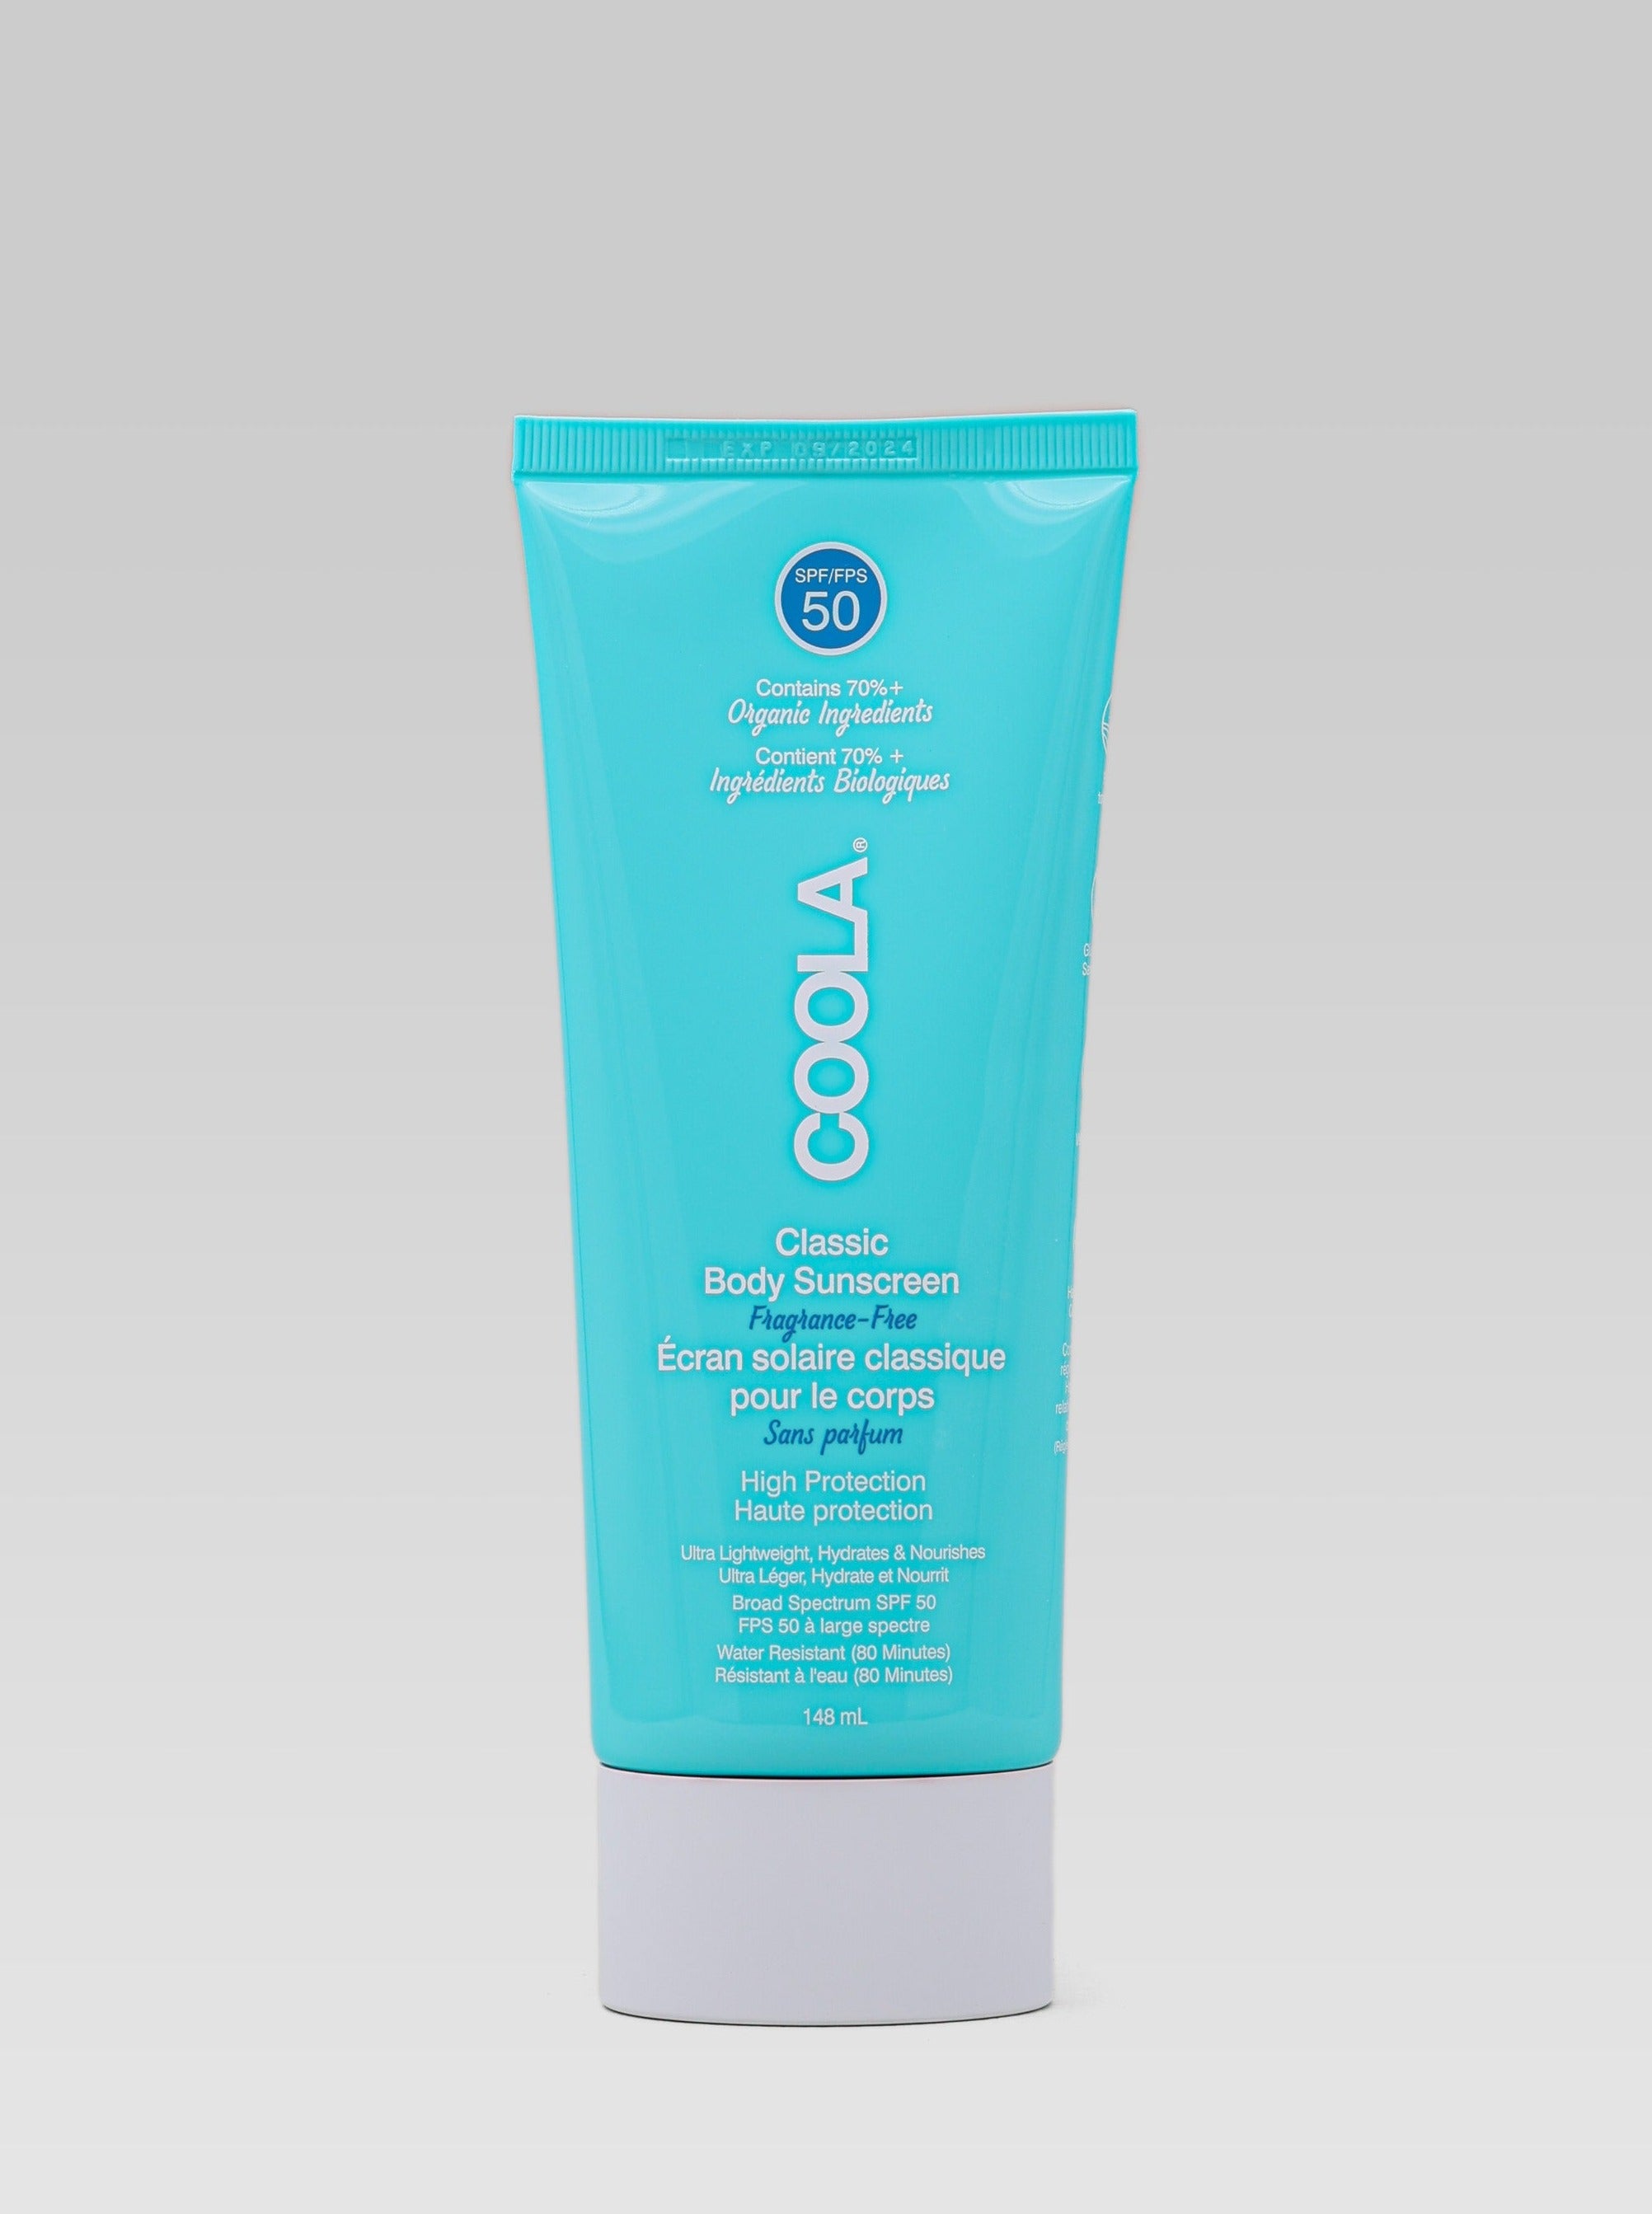 COOLA Classic Body Organic Sunscreen Lotion SPF 50 Fragrance Free